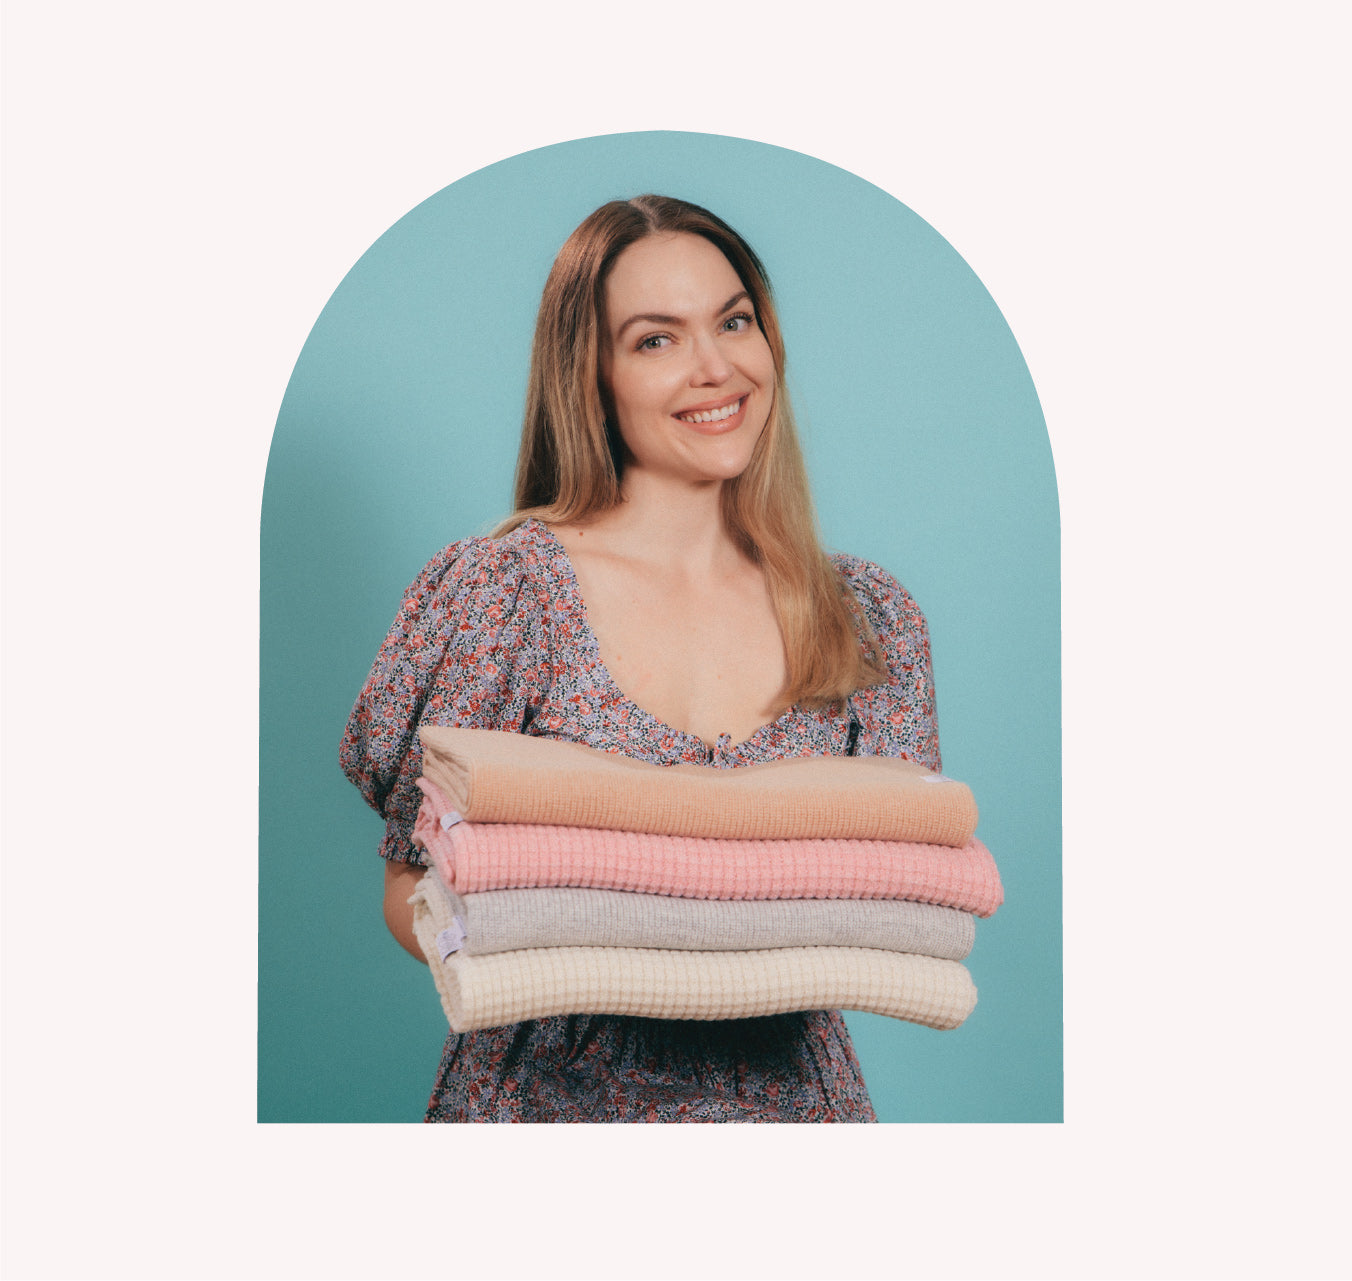 AU Baby founder Alexandra Ulmer. Textile expert and designer.